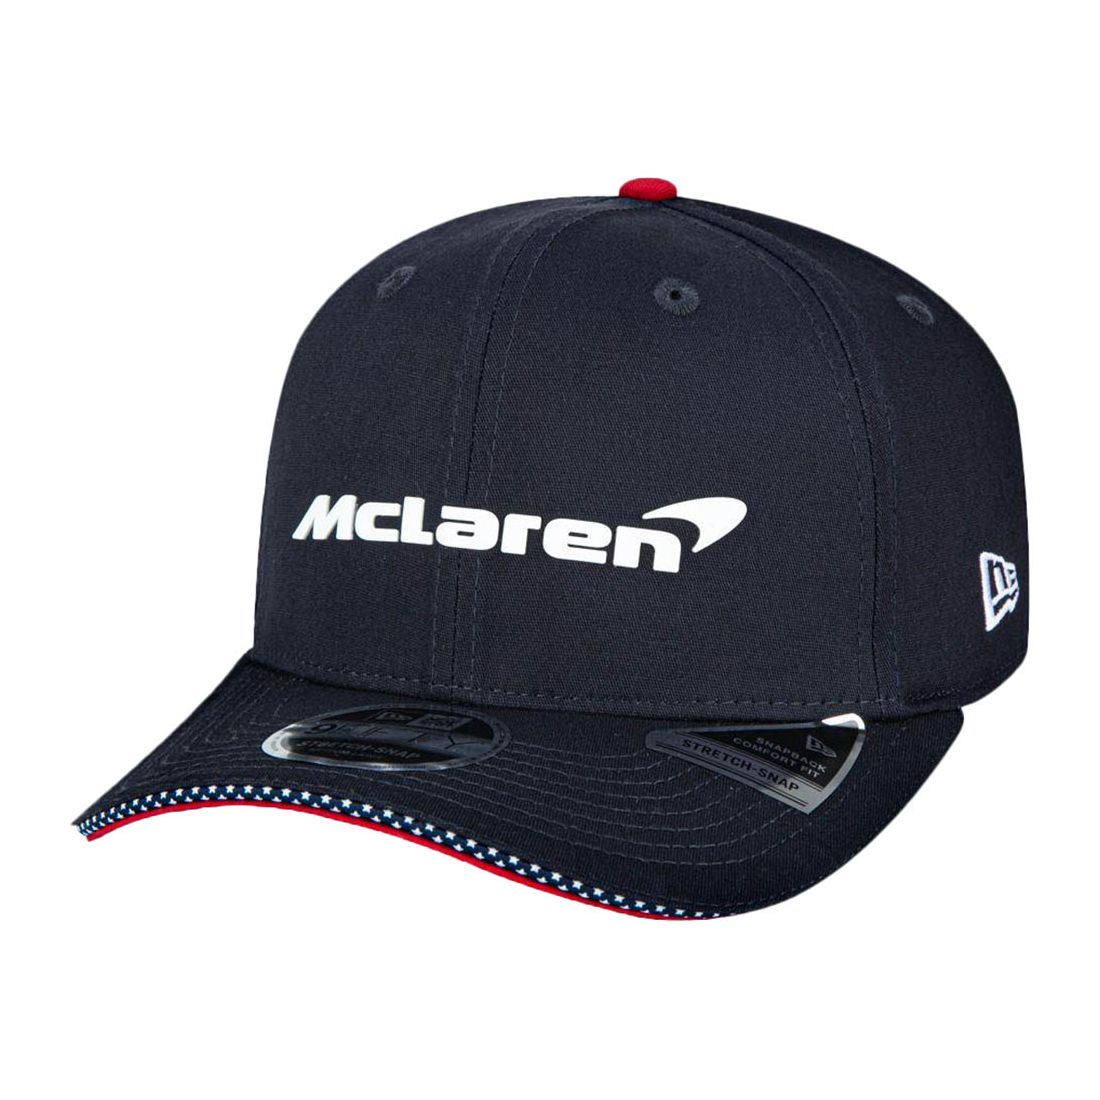 New Era Special Edition USA 9 Mclaren Racing Men's Cap Navy